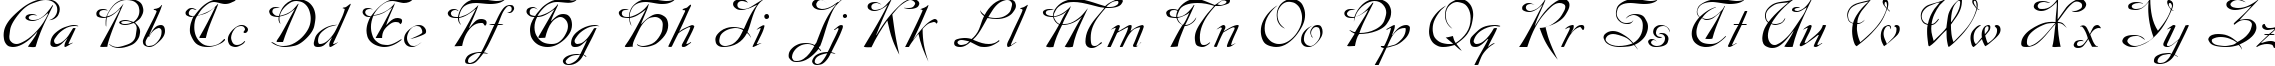 Пример написания английского алфавита шрифтом Dobkin Plain